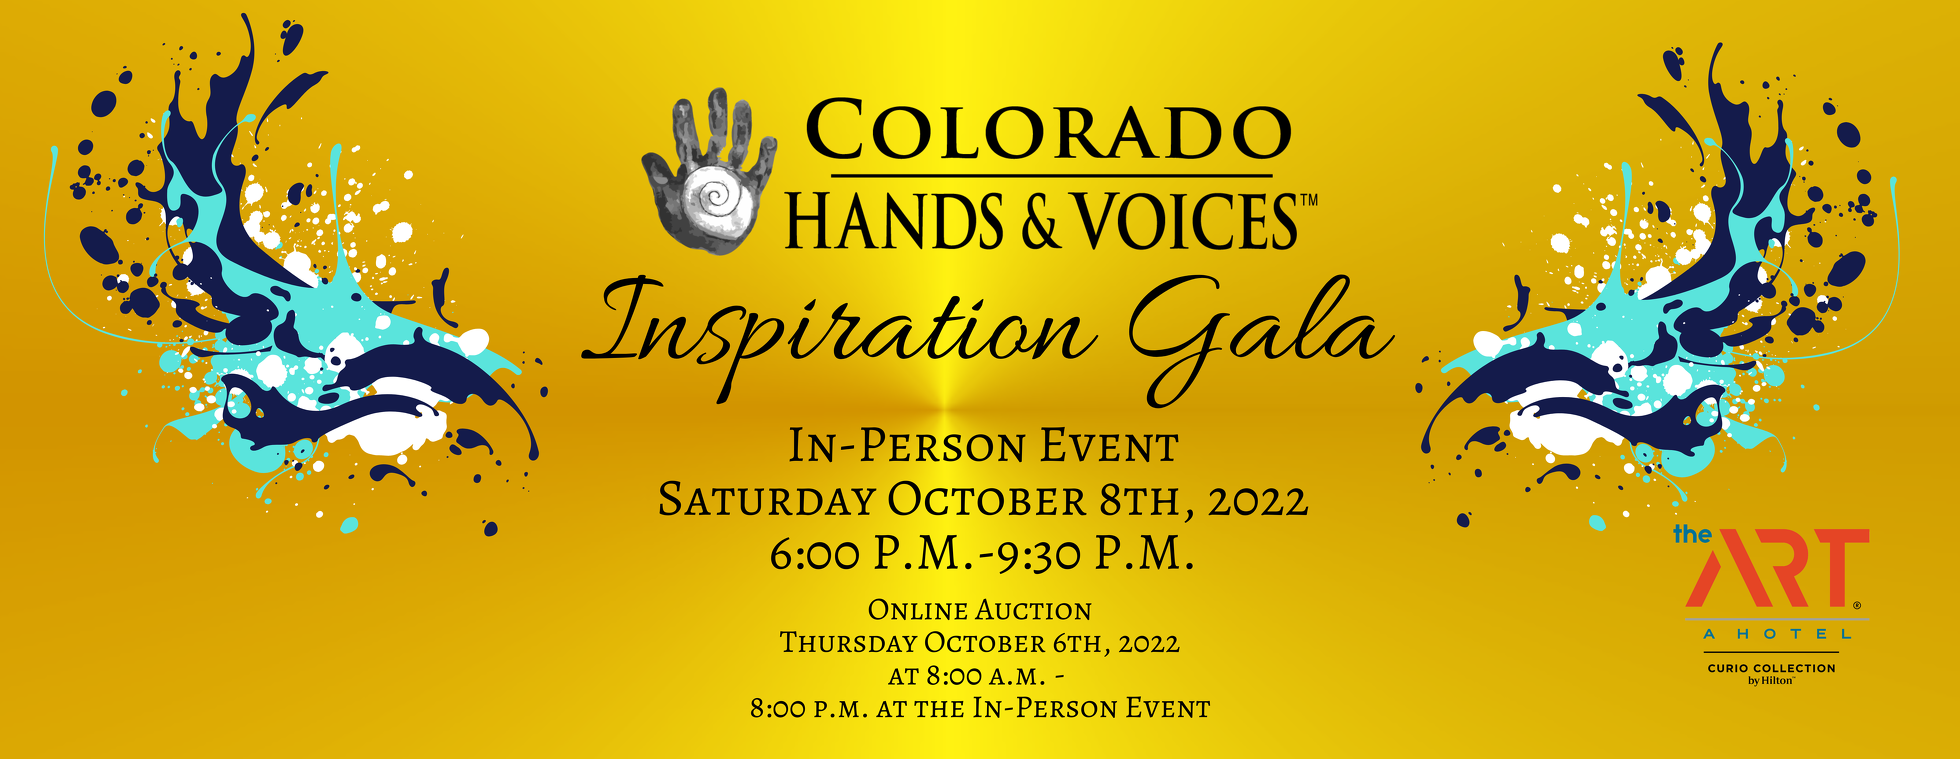 Colorado Hands & Voices Inspiration Gala